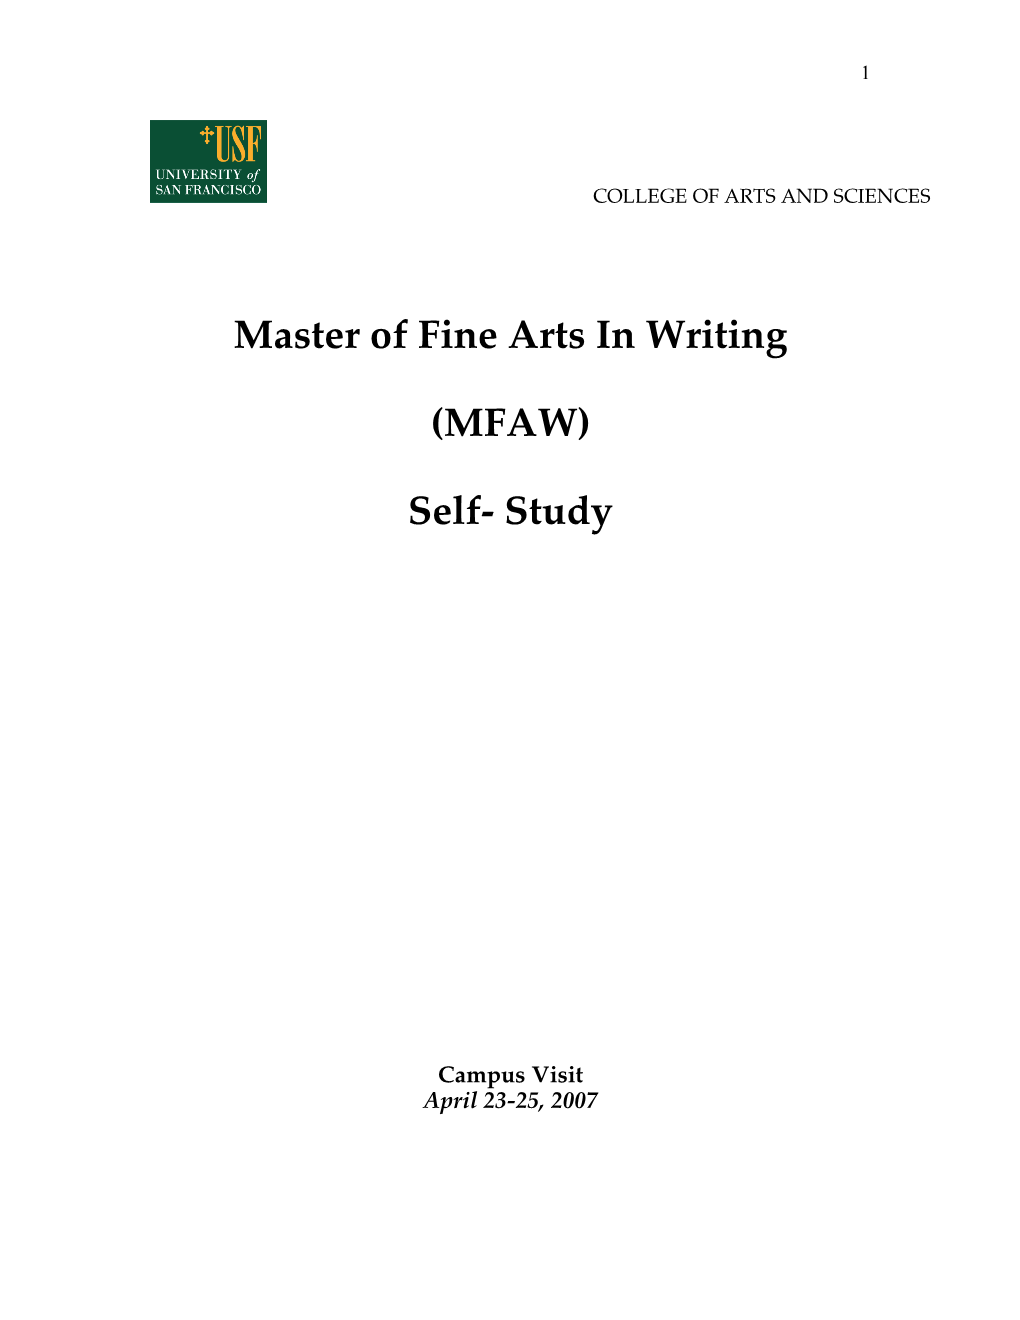 Master of Fine Arts in Writing (MFAW) Self- Study